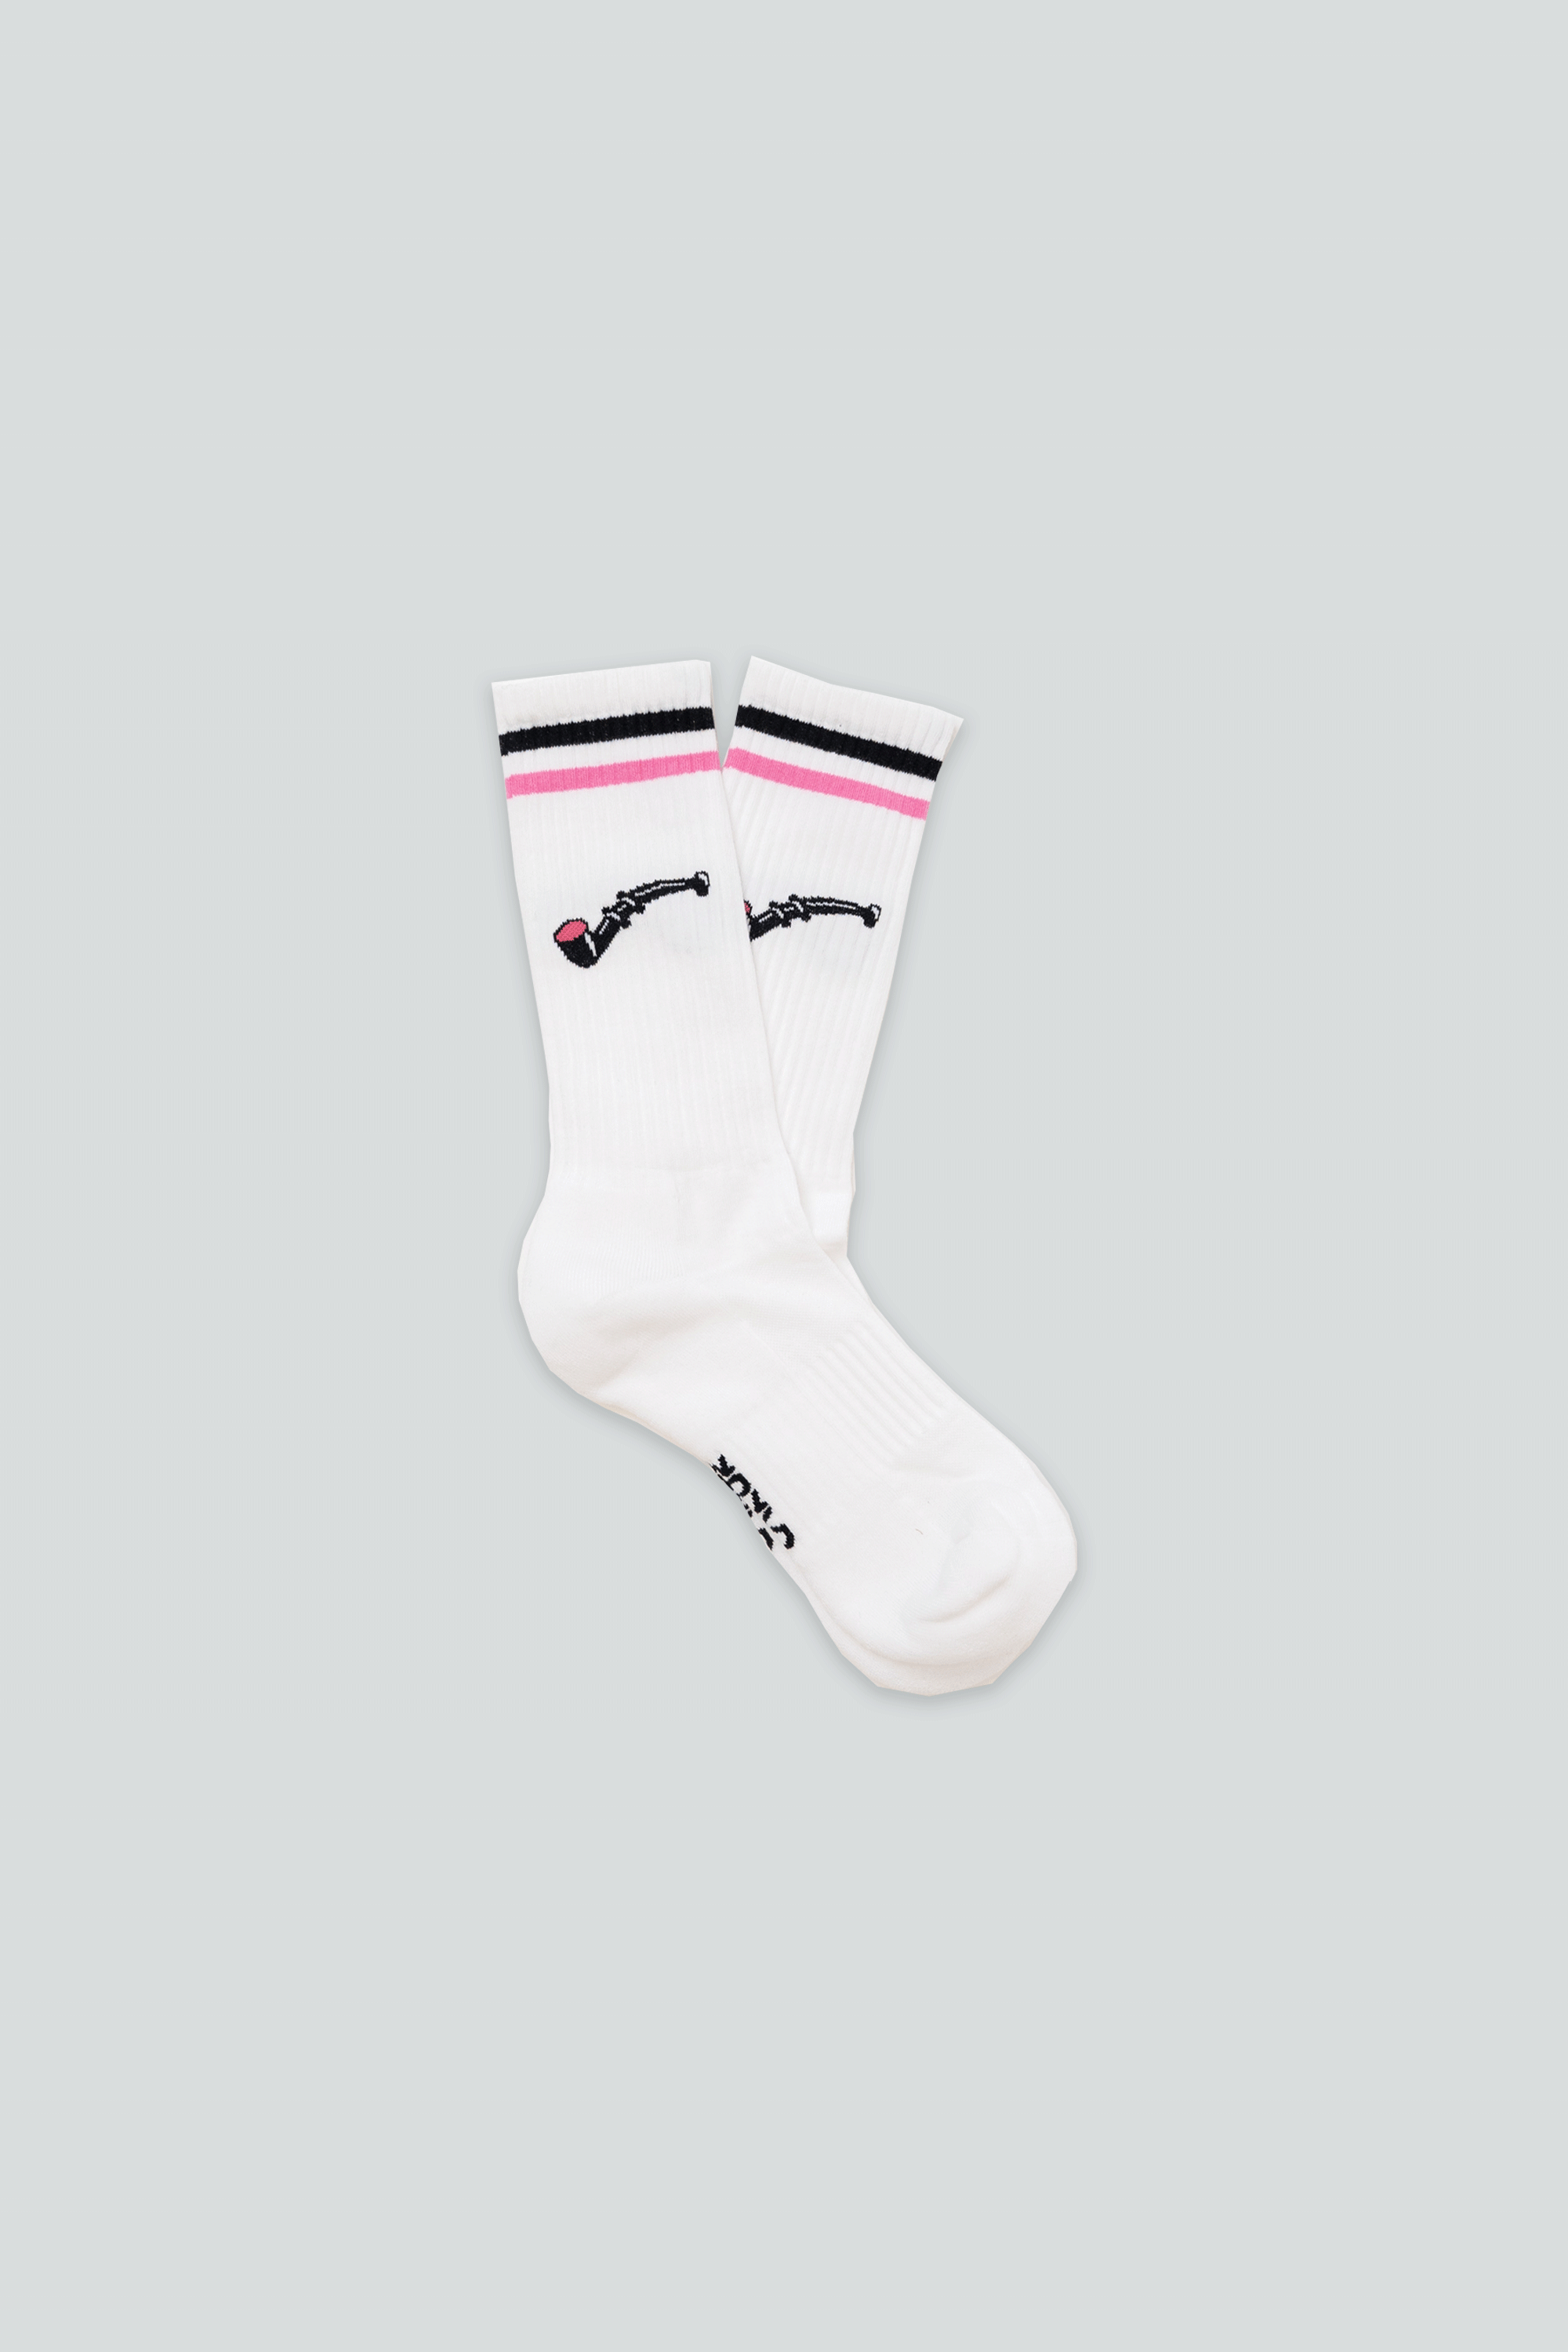 Lakridspibe Socks